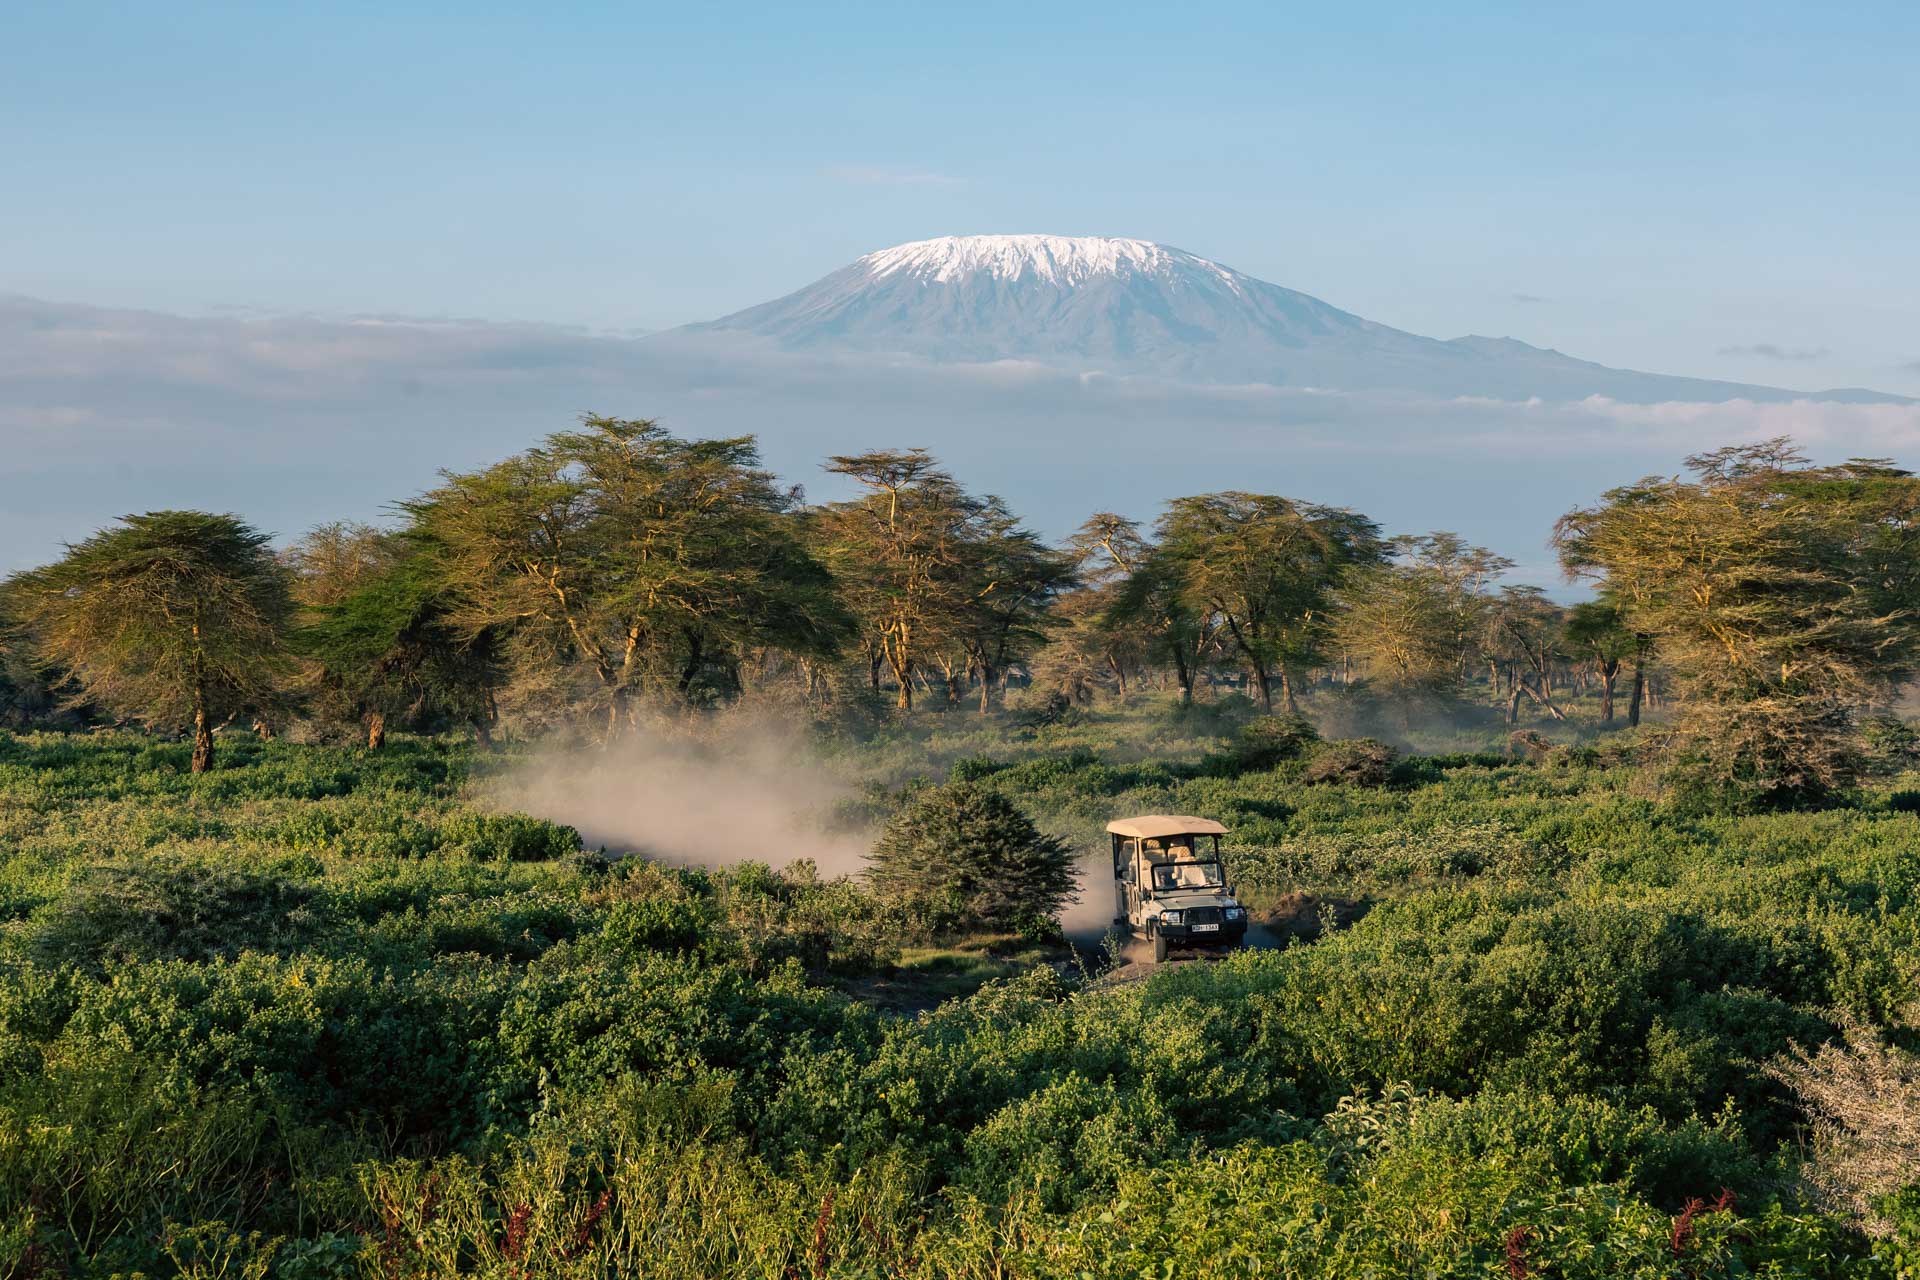 Game Drive on Safari in Amboseli Angama Luxury Safari Lodge with Mount Kilimanjaro